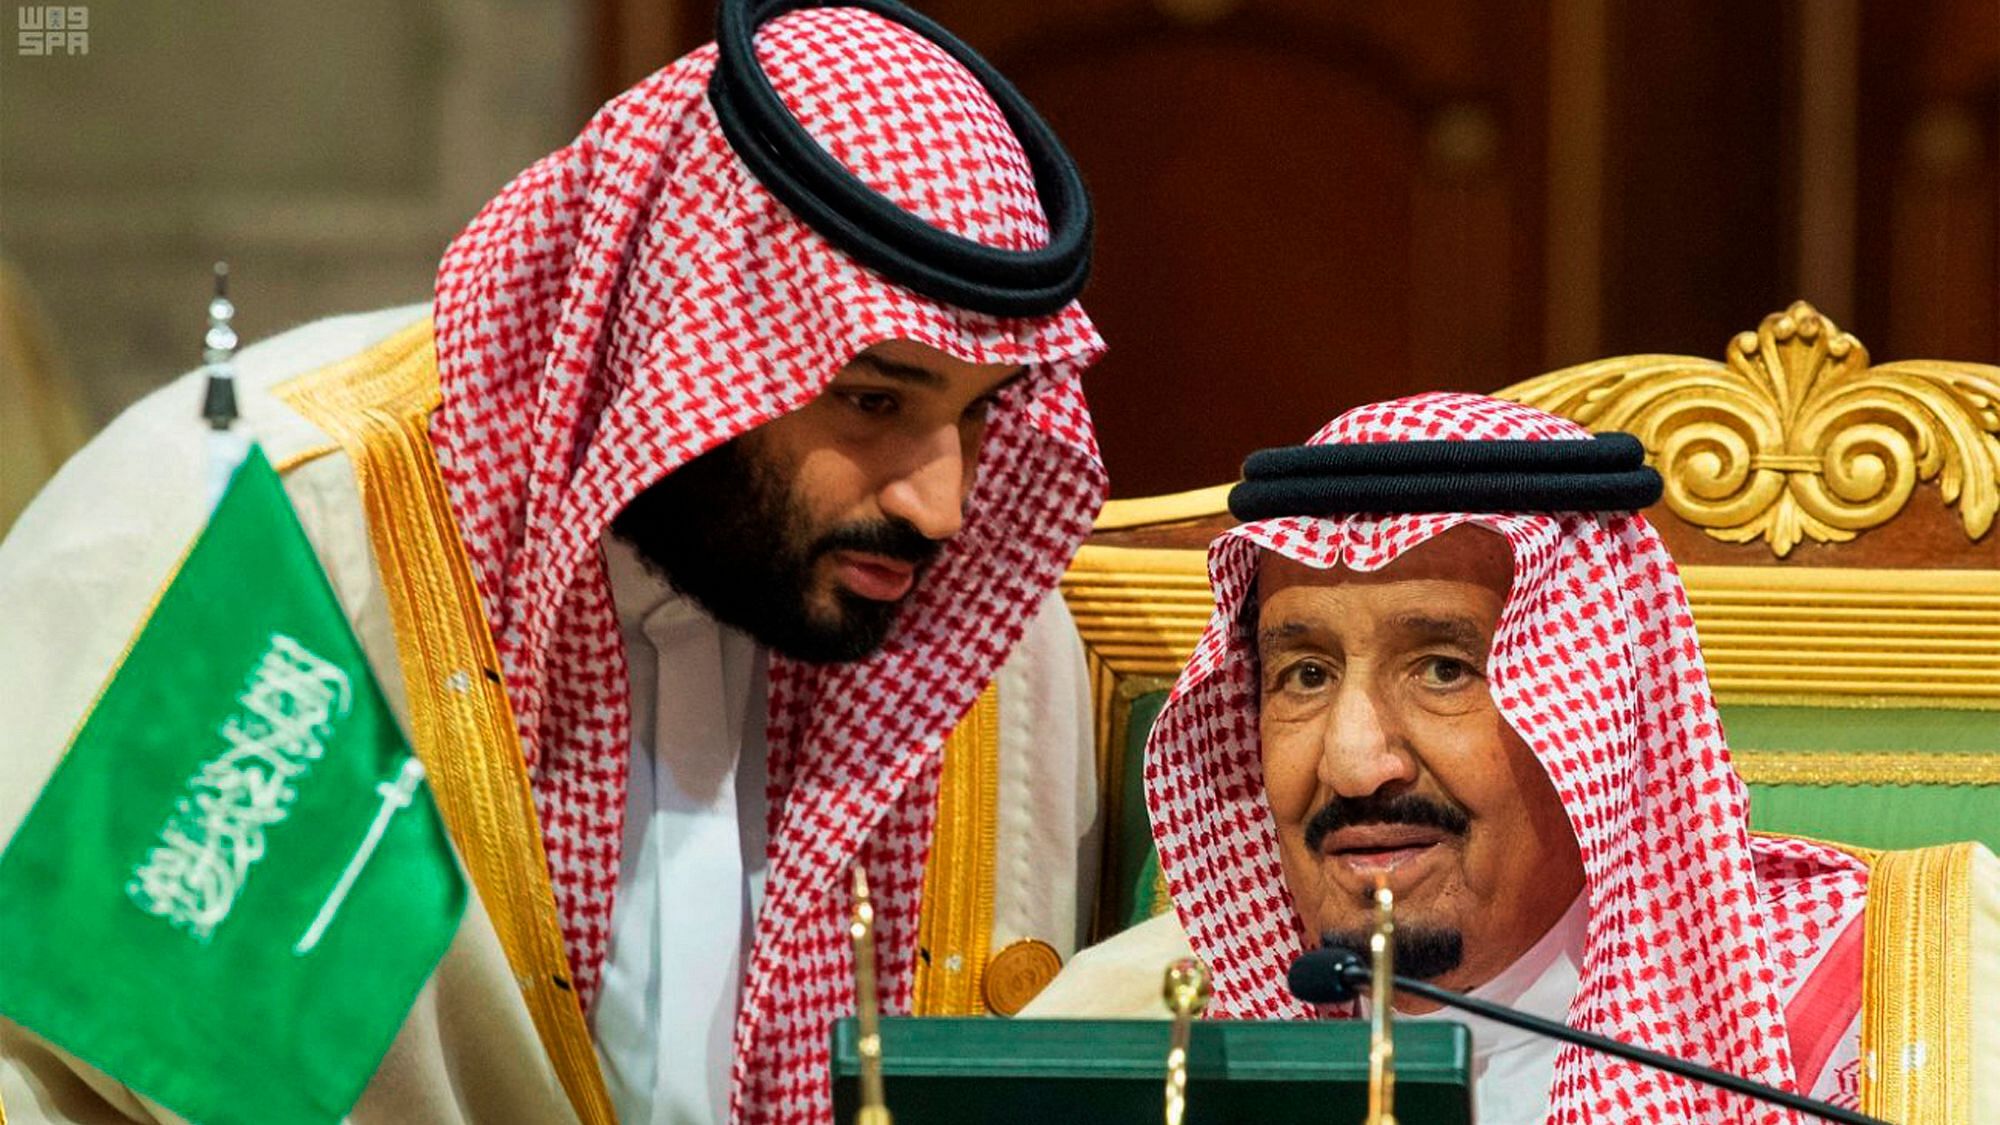 File image of Saudi Crown Prince Mohammed bin Salman (left) and his father, King Salman.